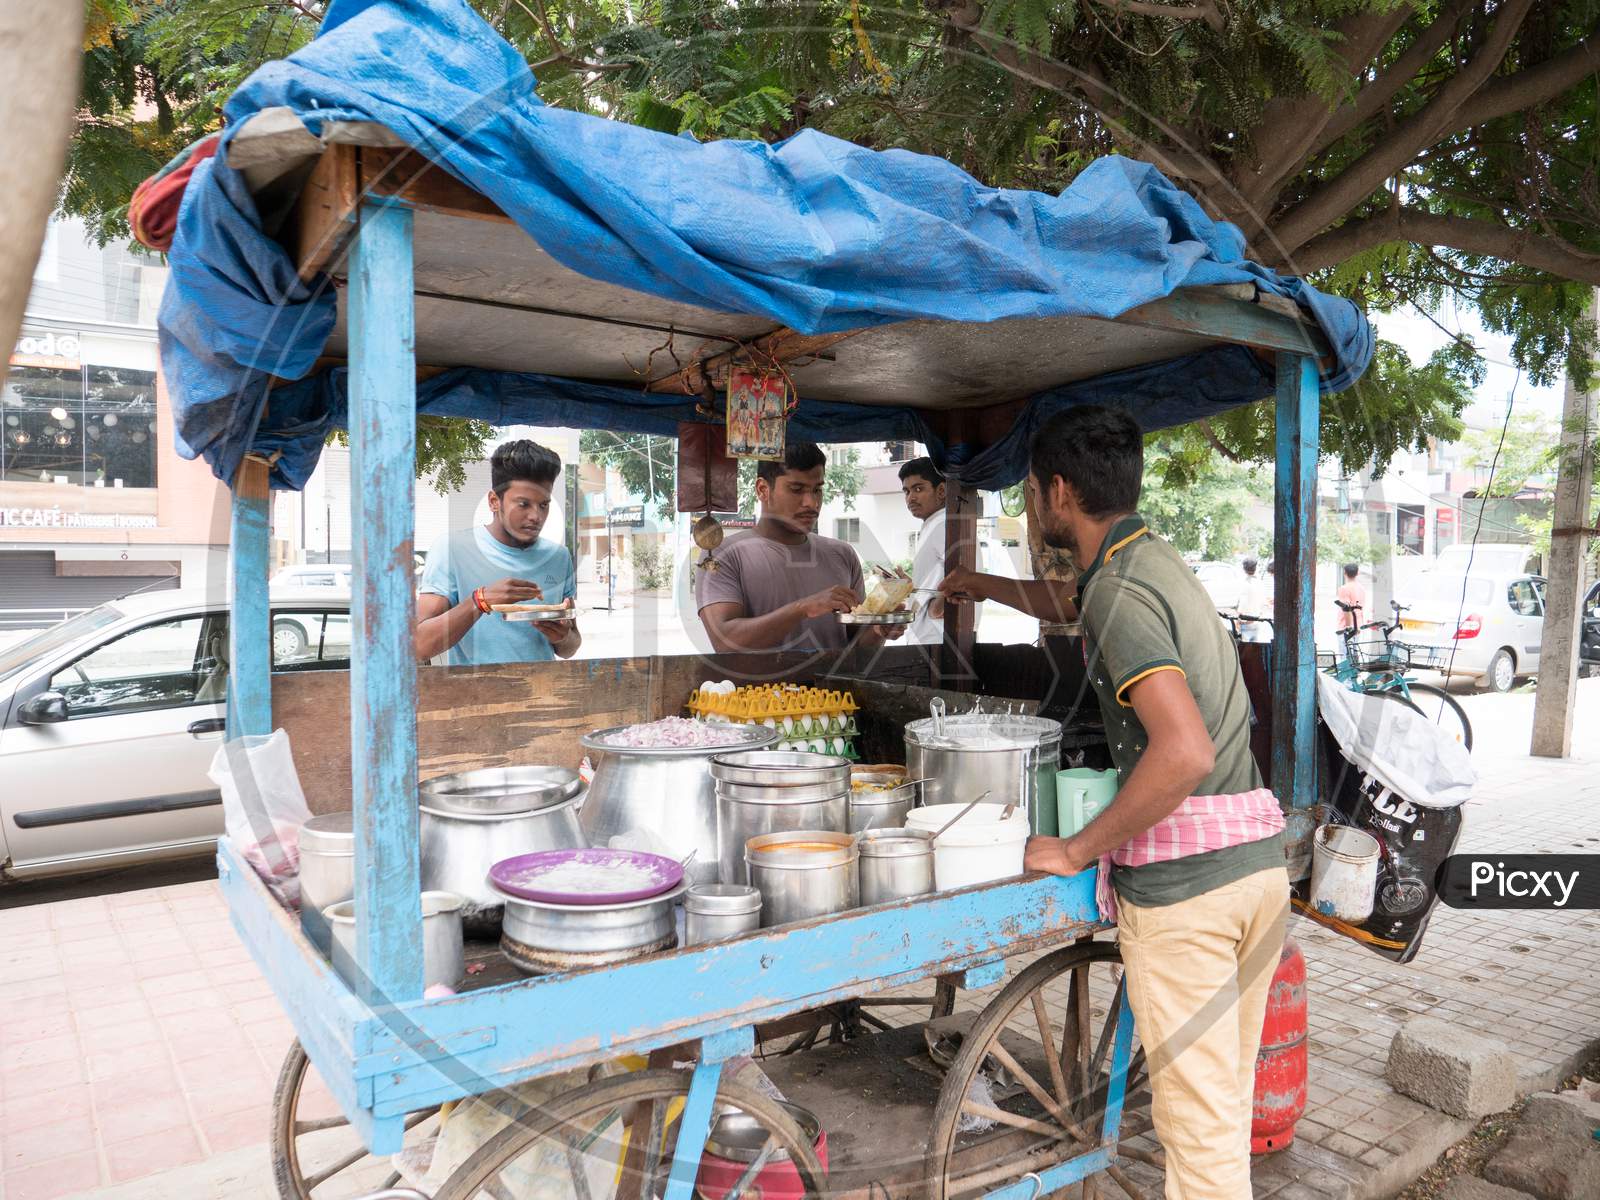 Bengaluru, Karnataka / India - November 19 2019: People eating at a road side makeshift eatery during day time